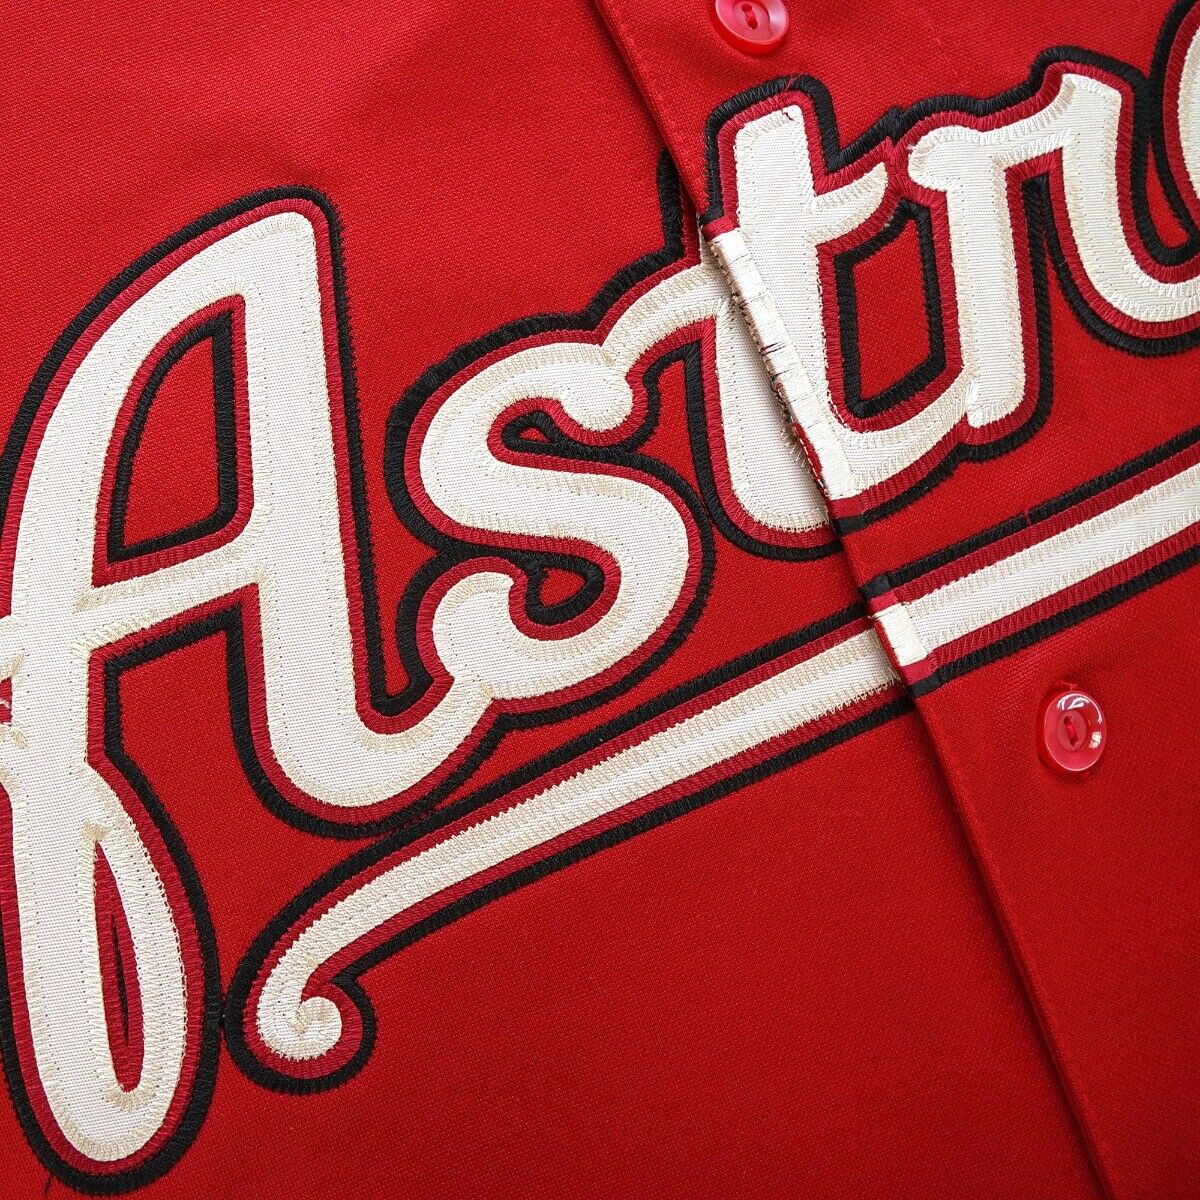 Craig Biggio 2012 Houston Astros Red Men's Jersey